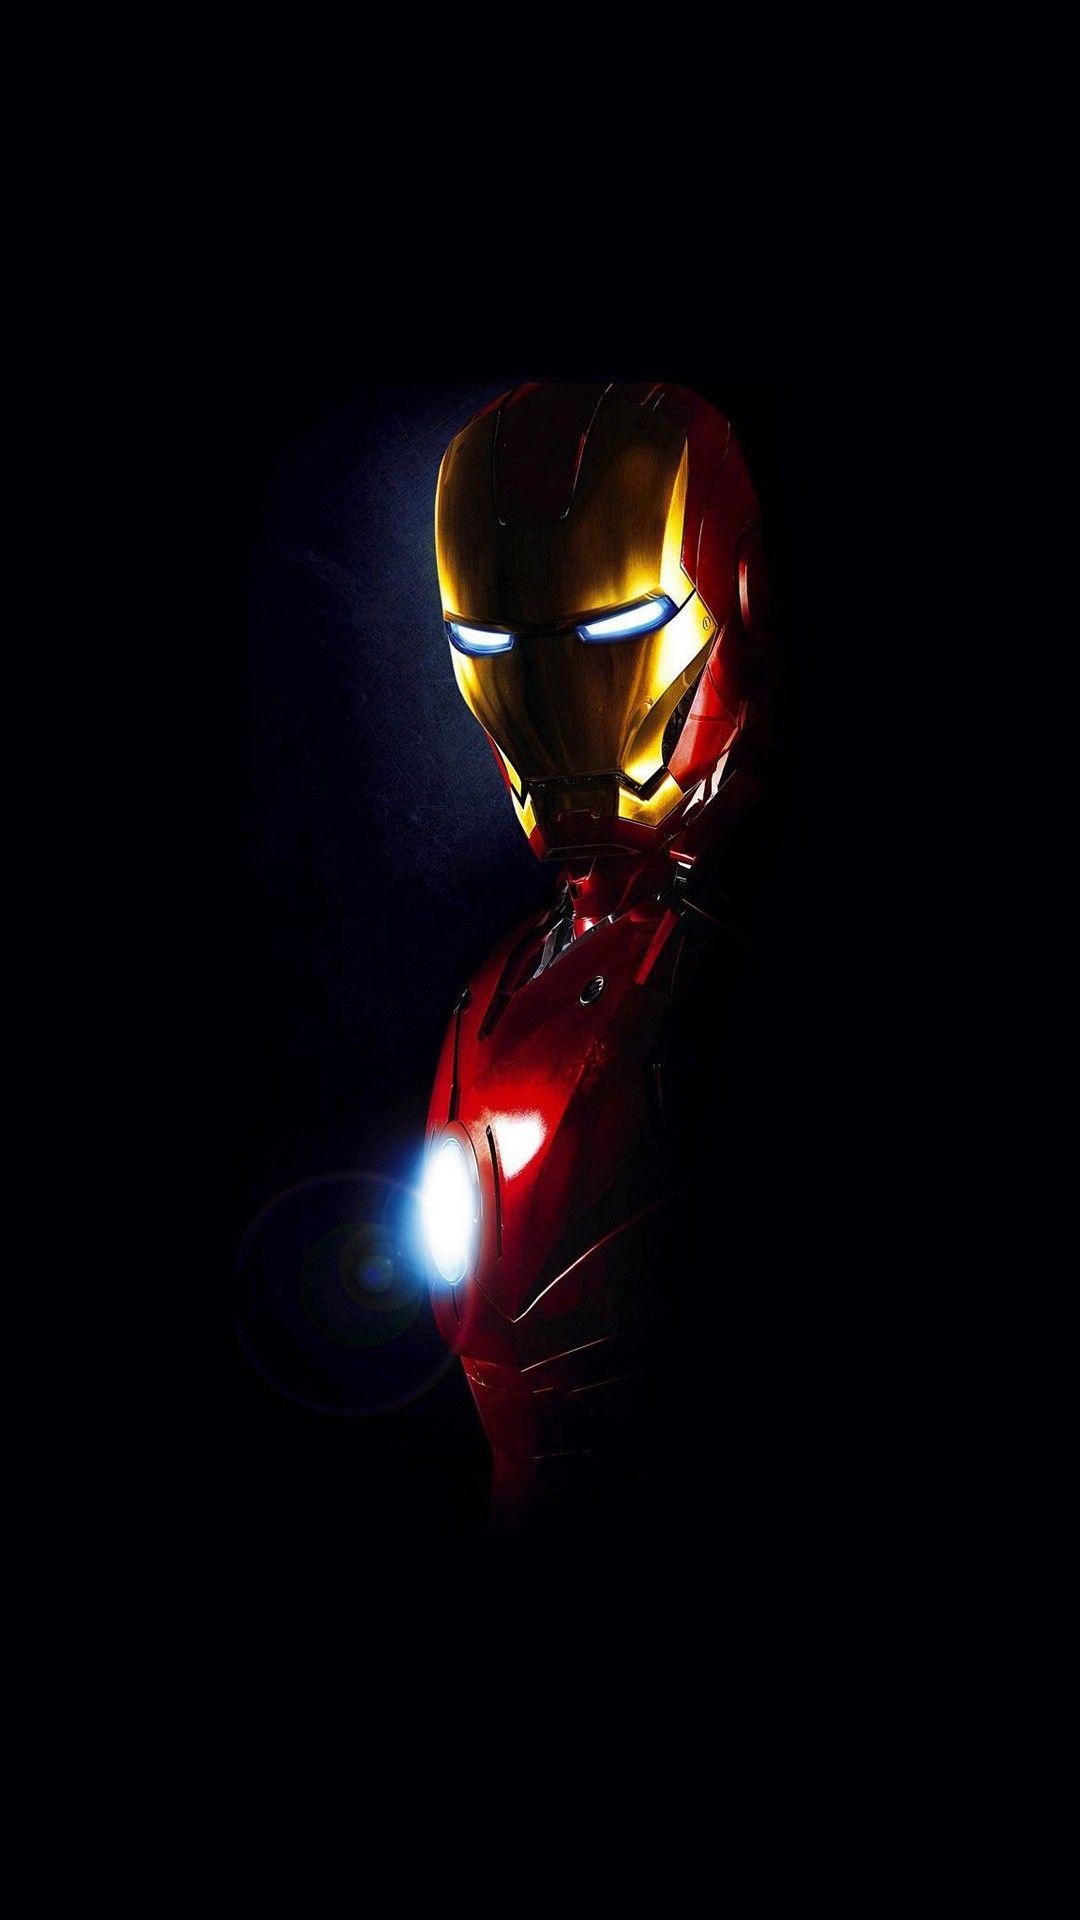 Iron Man Shadow Minimal Smartphone Wallpaper and Lockscreen HD